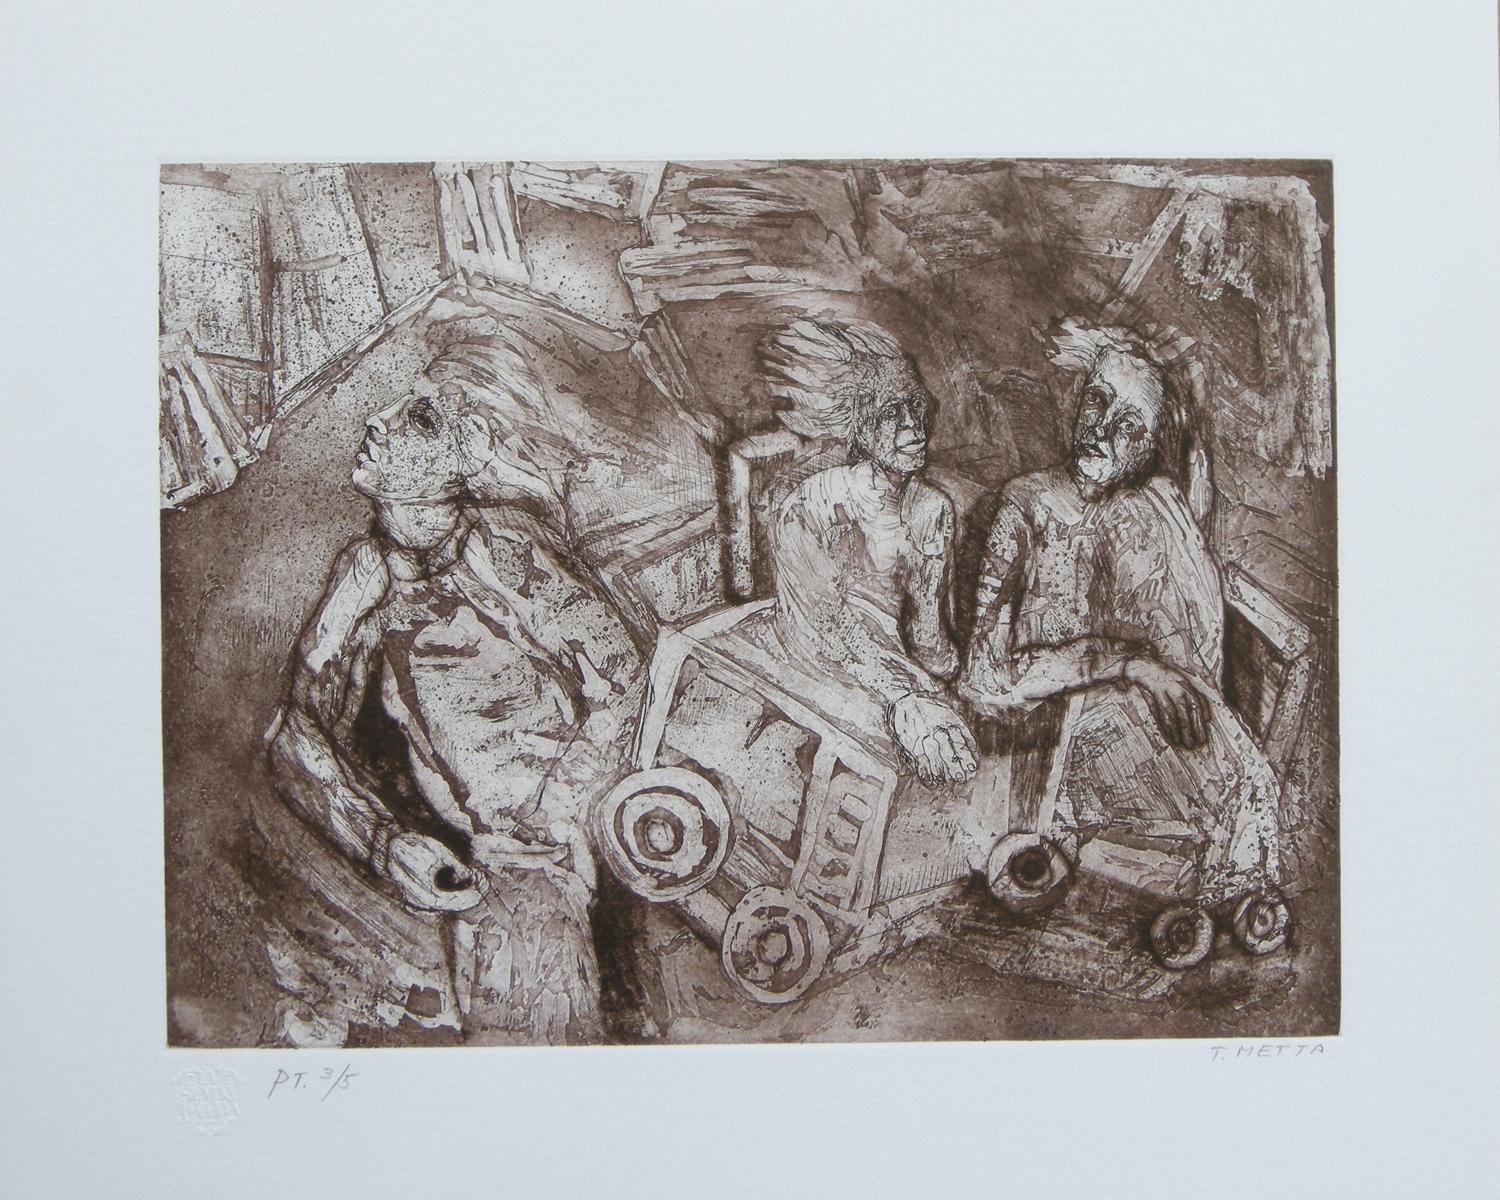 Tere Metta (Mexico, )
'Untitled', 2002
etching, aquatint on paper Guarro Biblos 250g.
14.4 x 18 in. (36.5 x 45.5 cm.)
ID: MET-102
Unframed